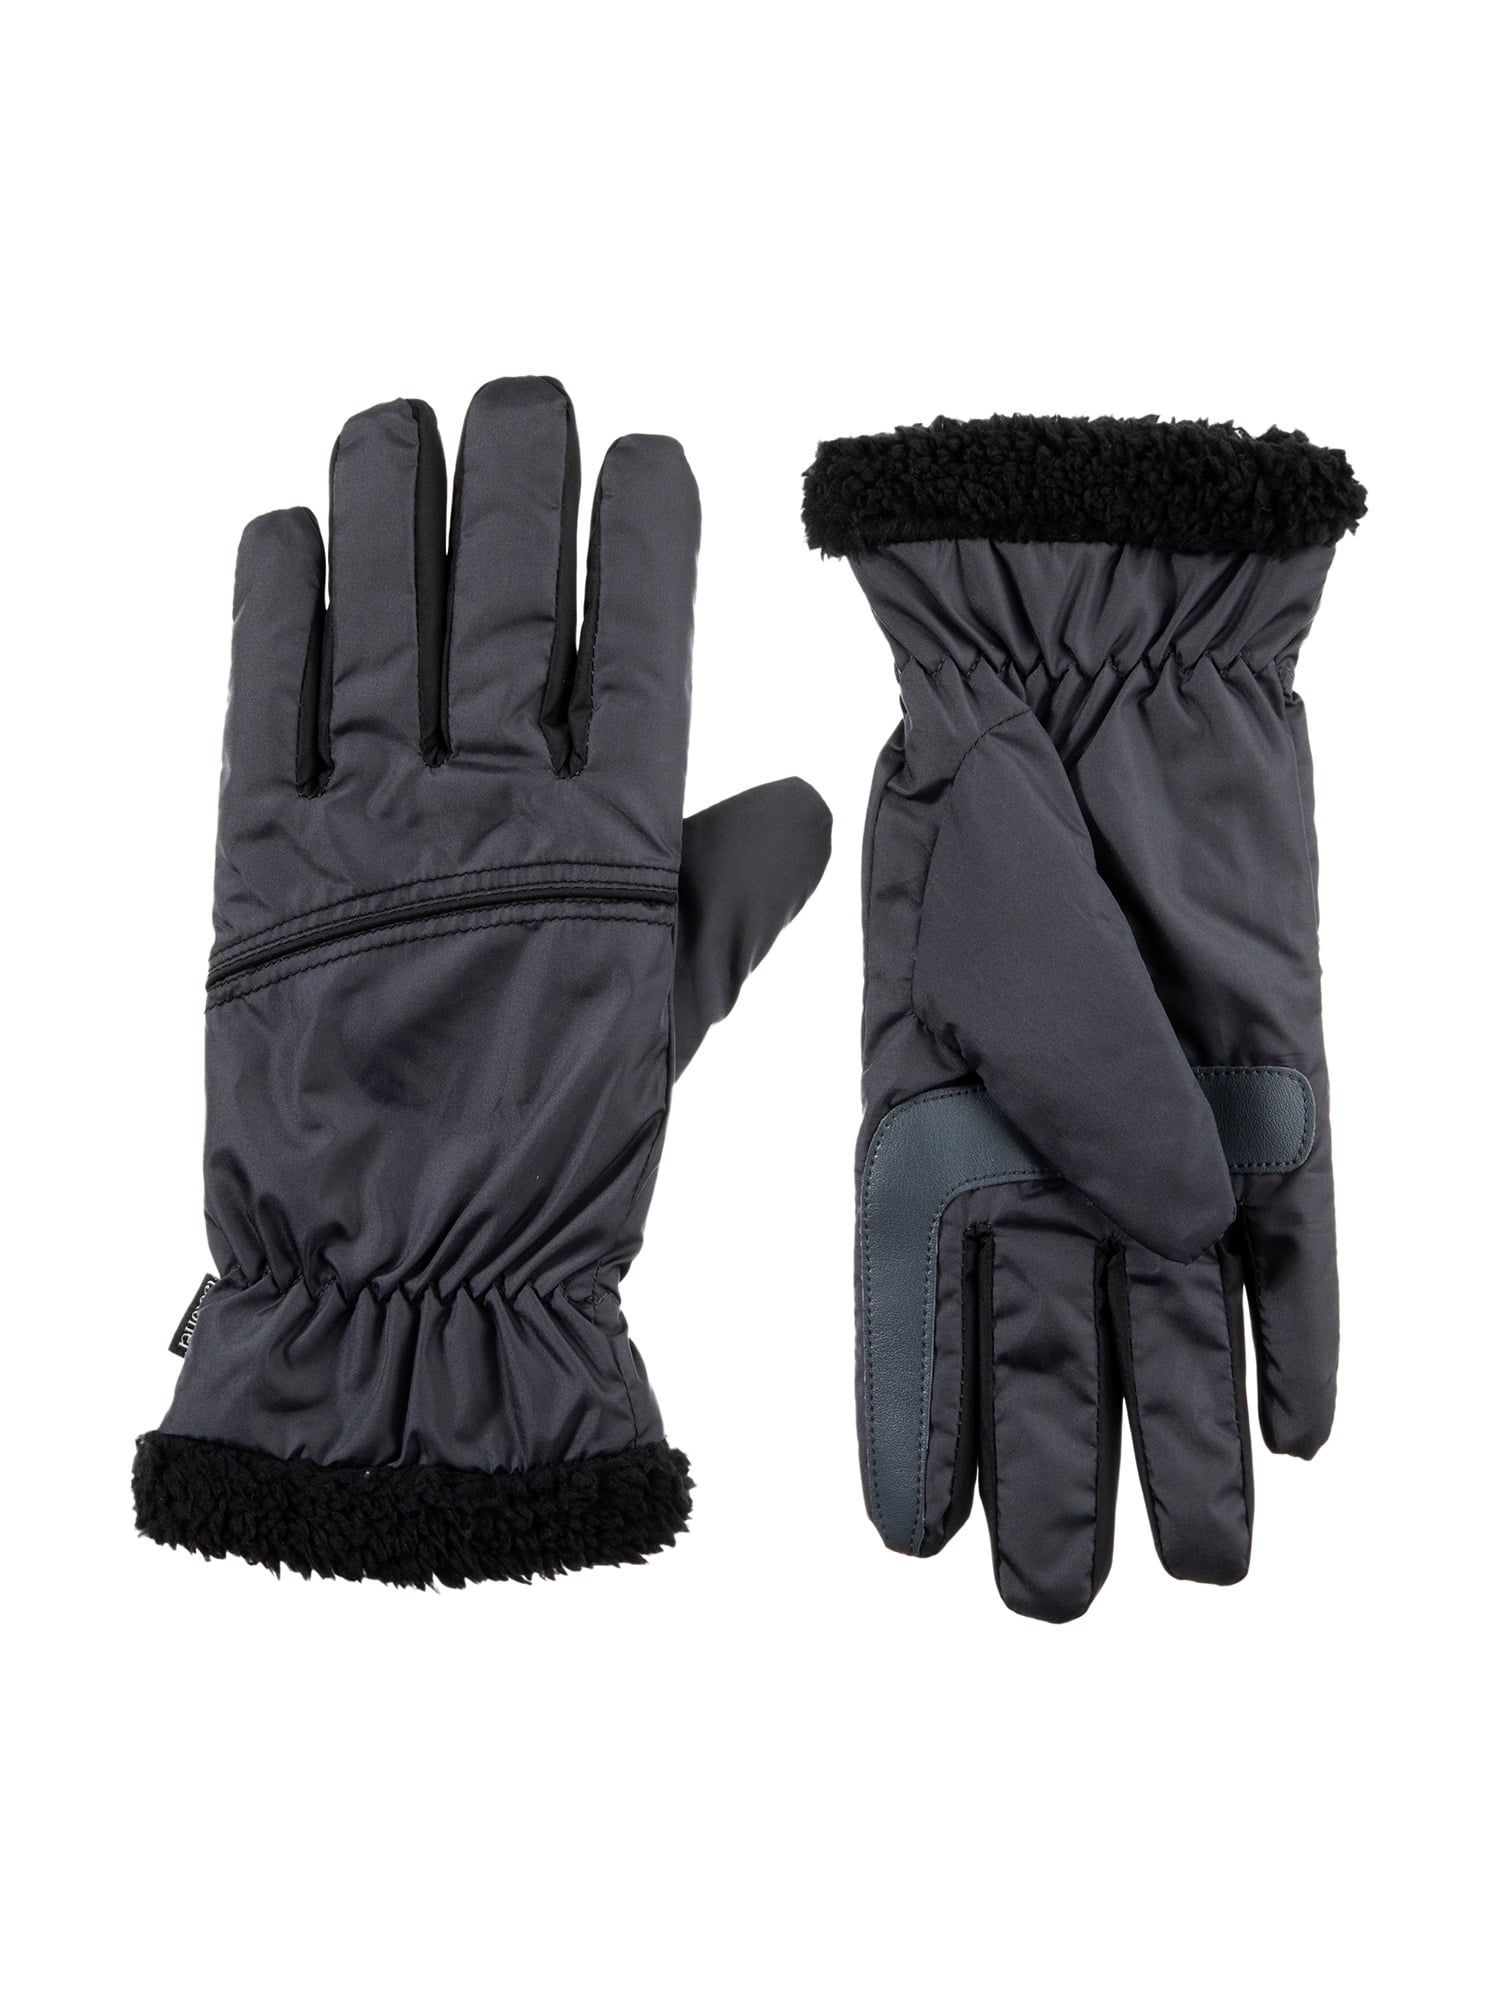 isotoner winter gloves